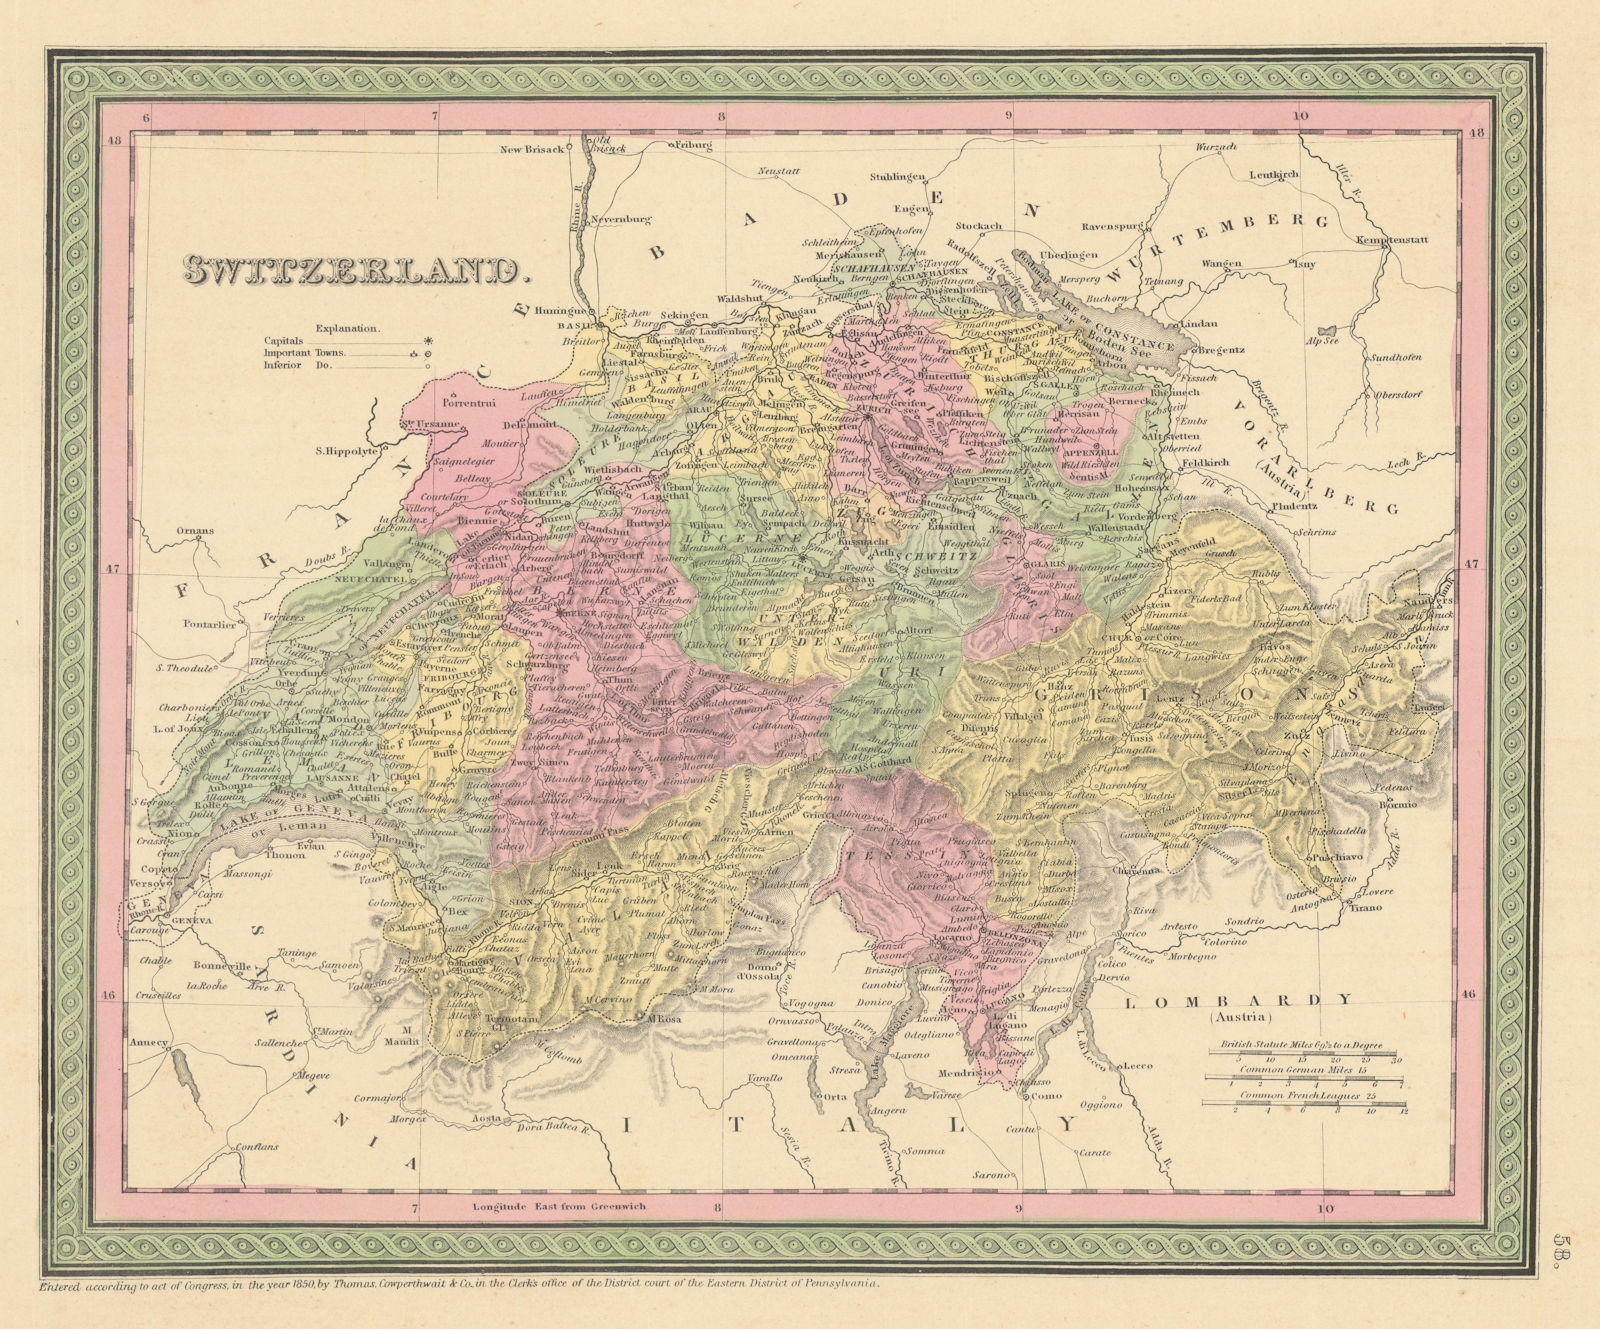 Associate Product Switzerland. Schweiz Suisse. THOMAS, COWPERTHWAIT 1852 old antique map chart